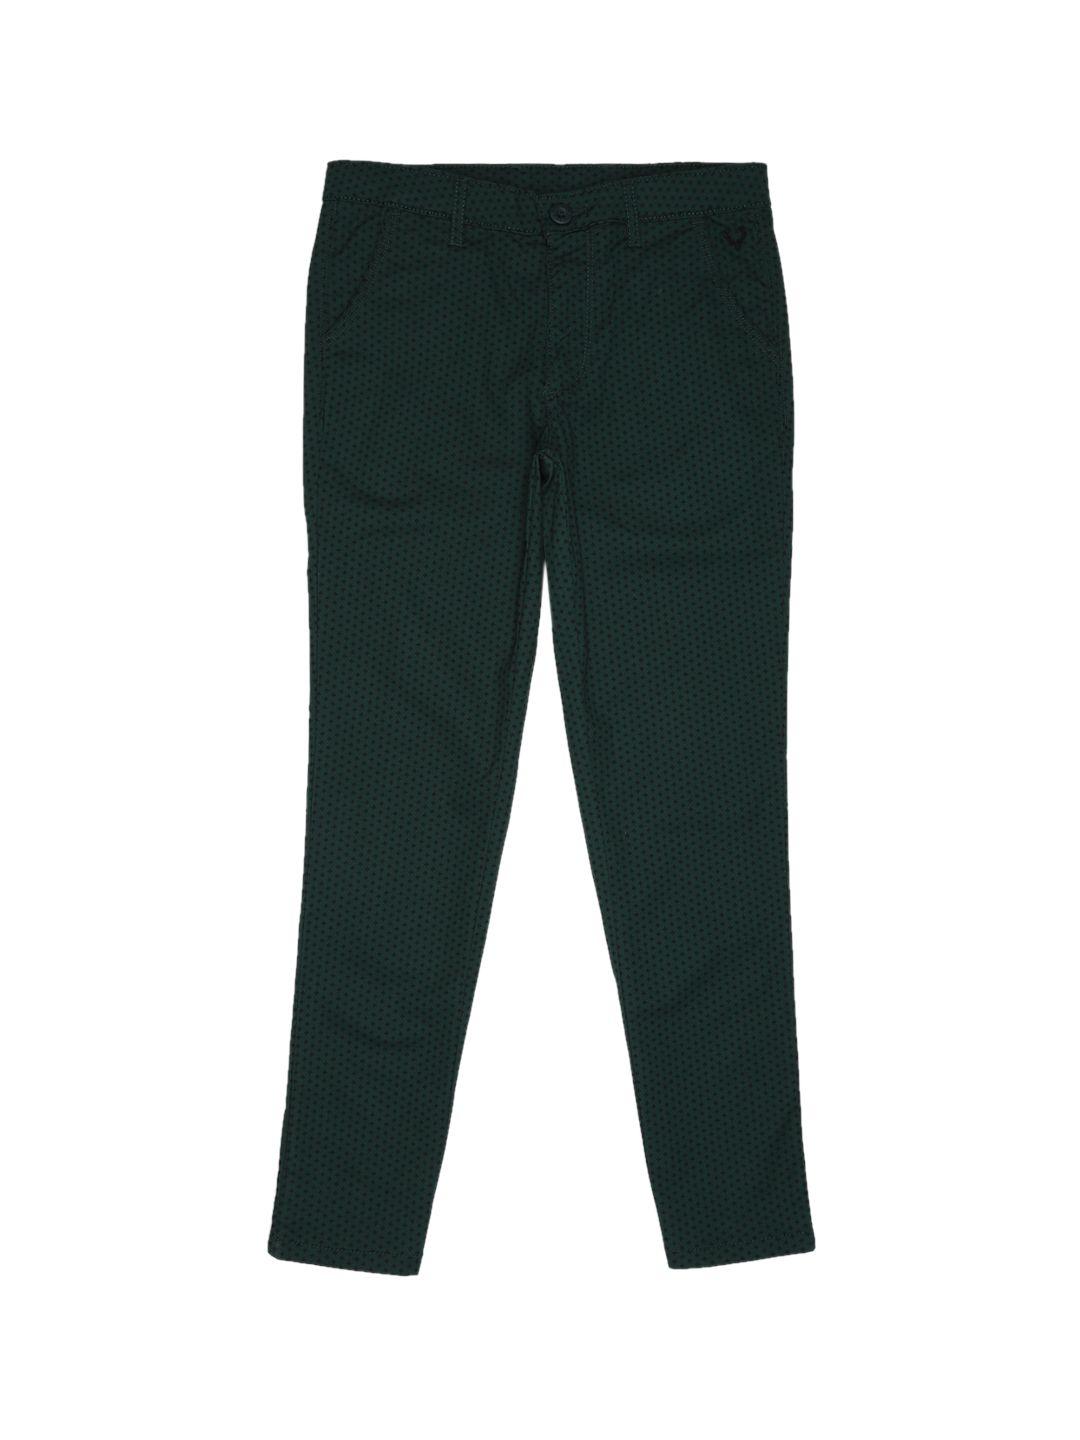 allen solly junior boys green printed regular trousers